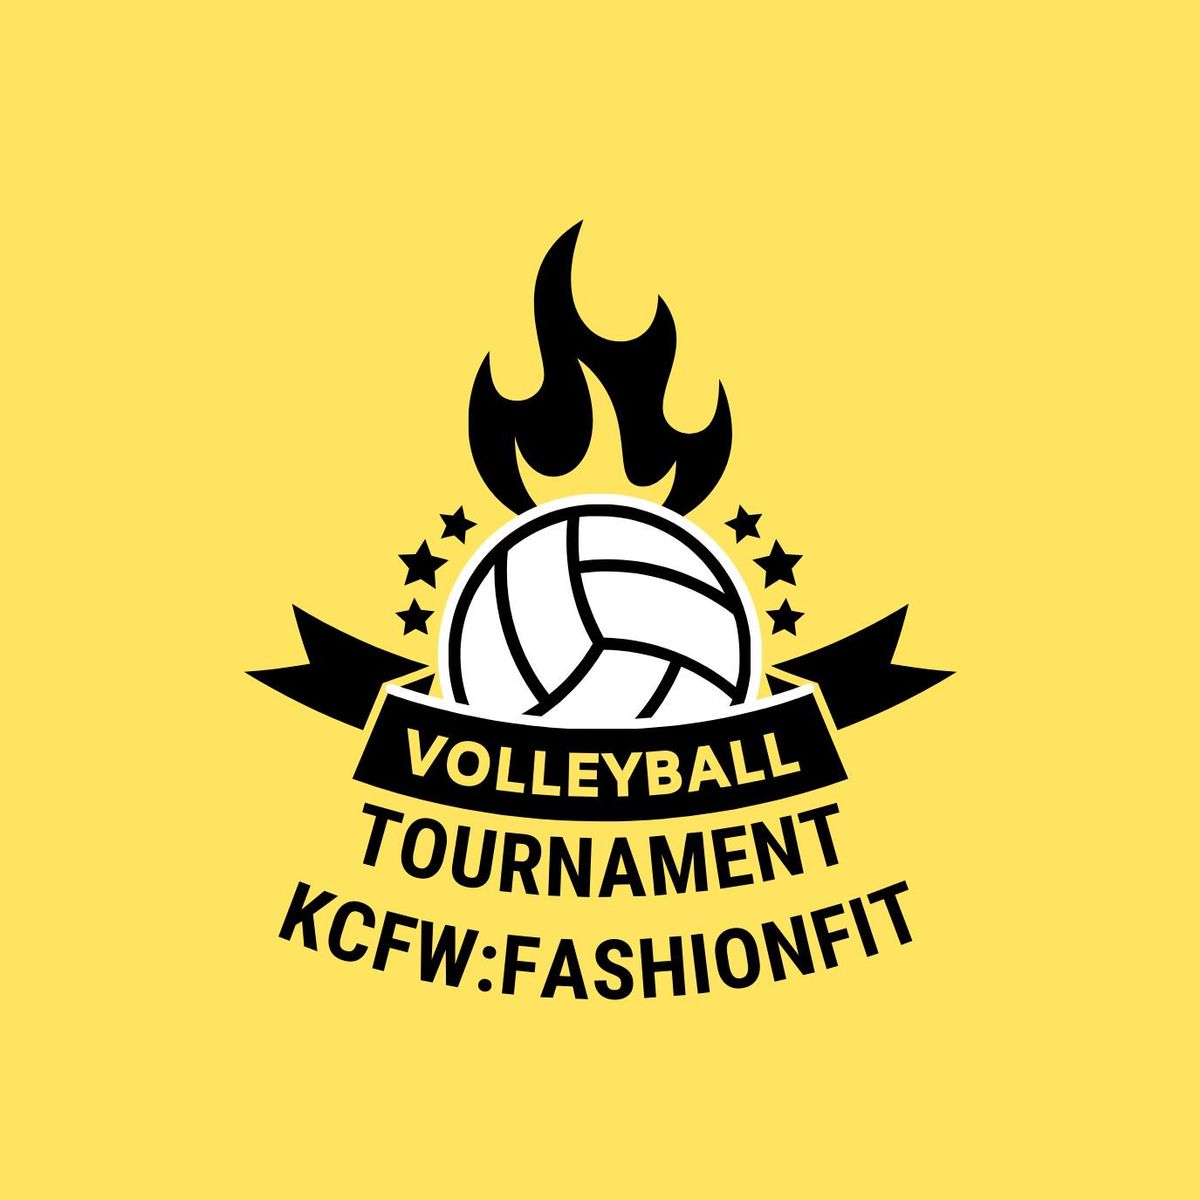 KCFW fashionFit Volleyball Tournament